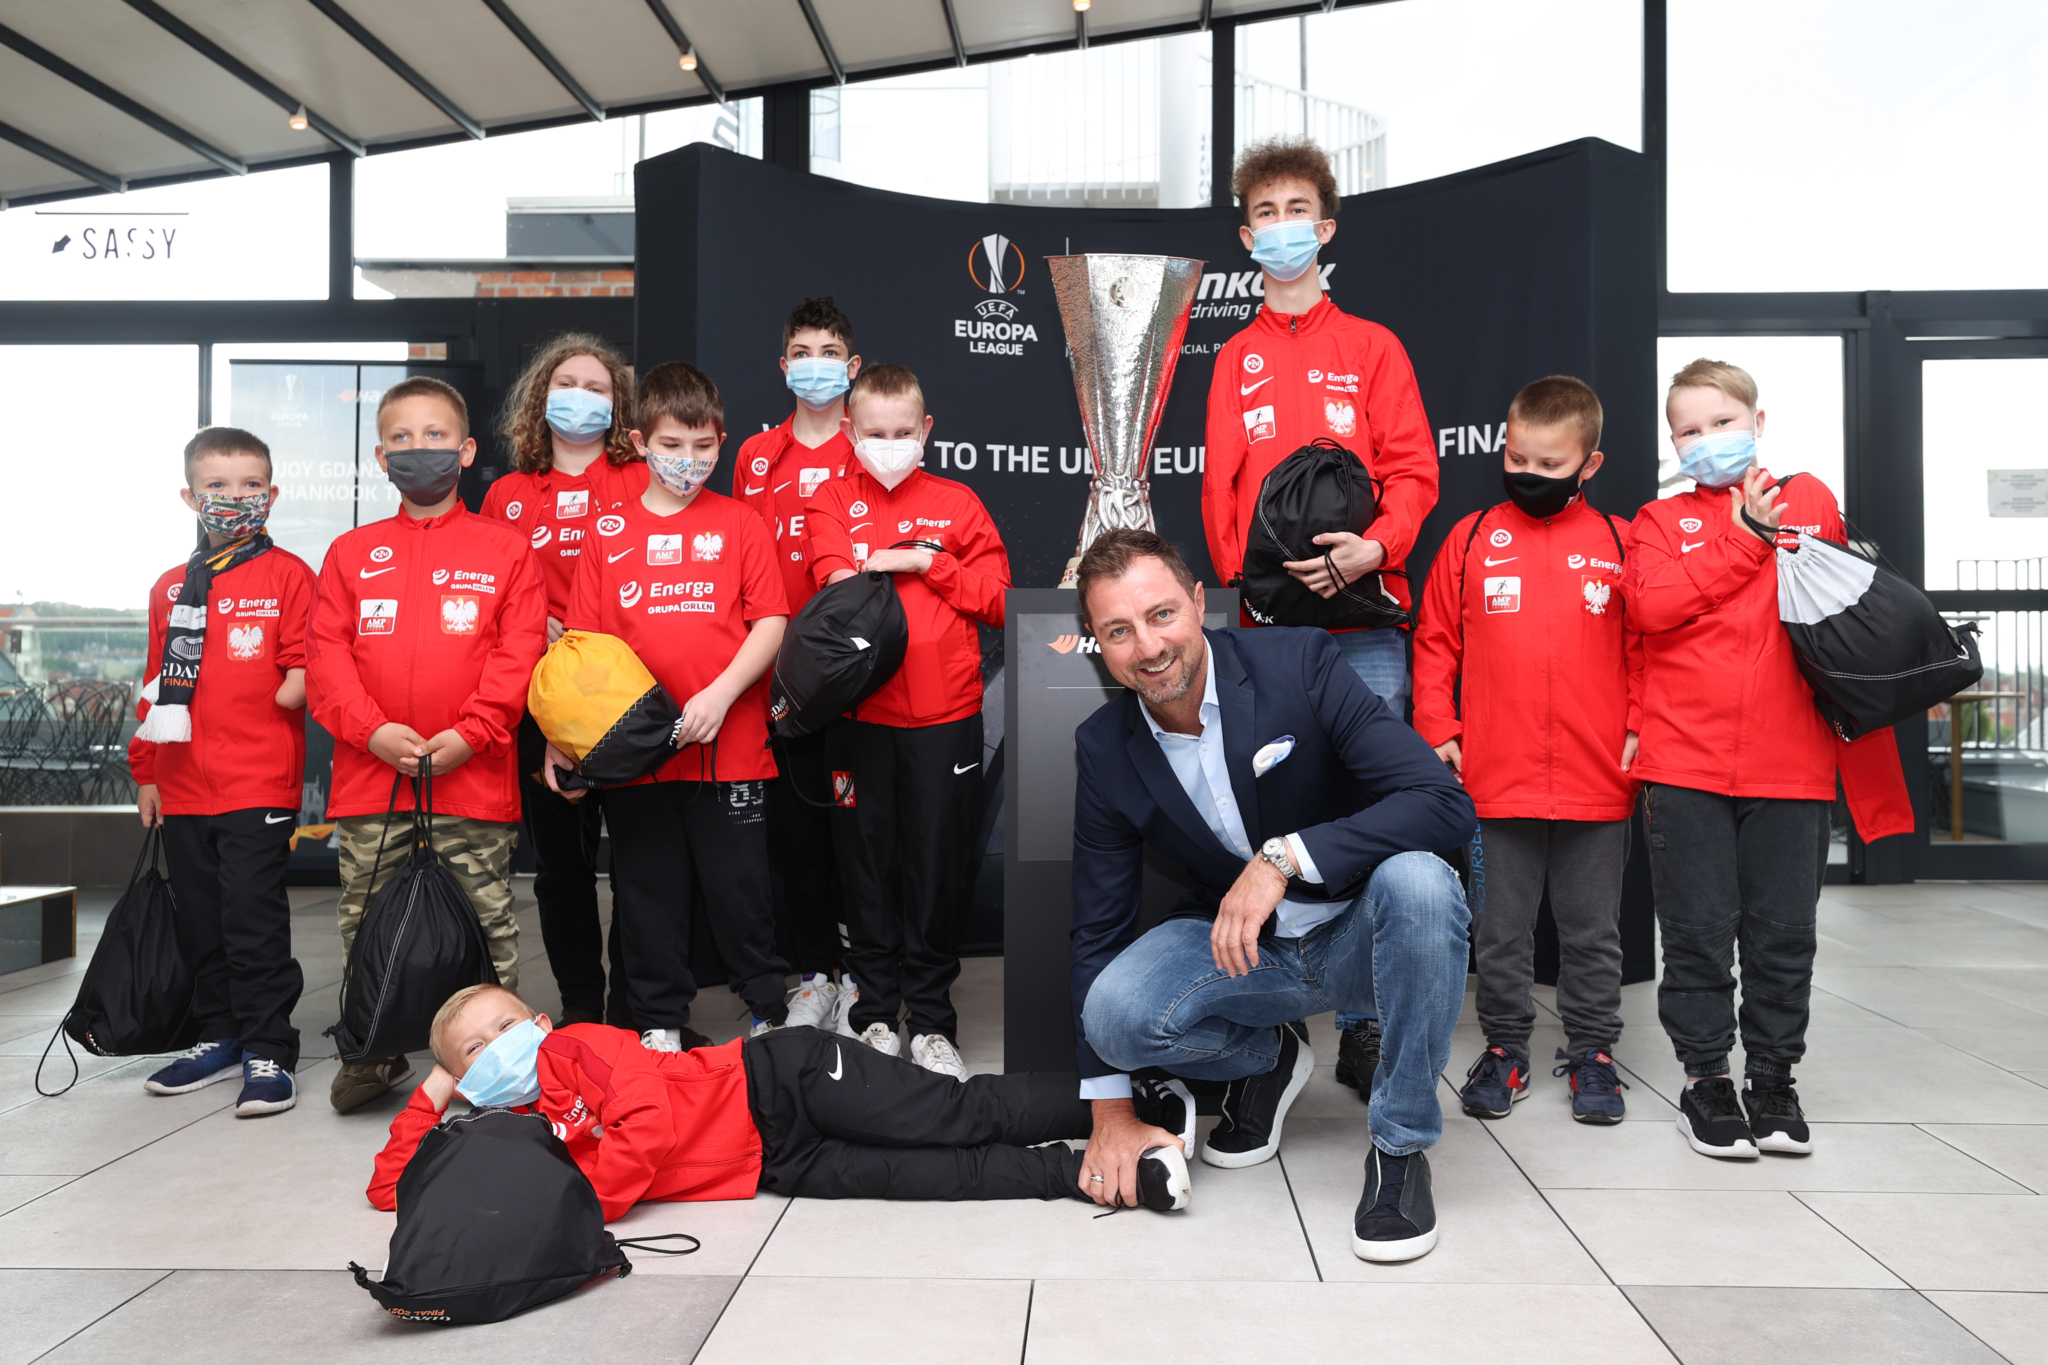 Hankook surprises children with Europa league final tickets